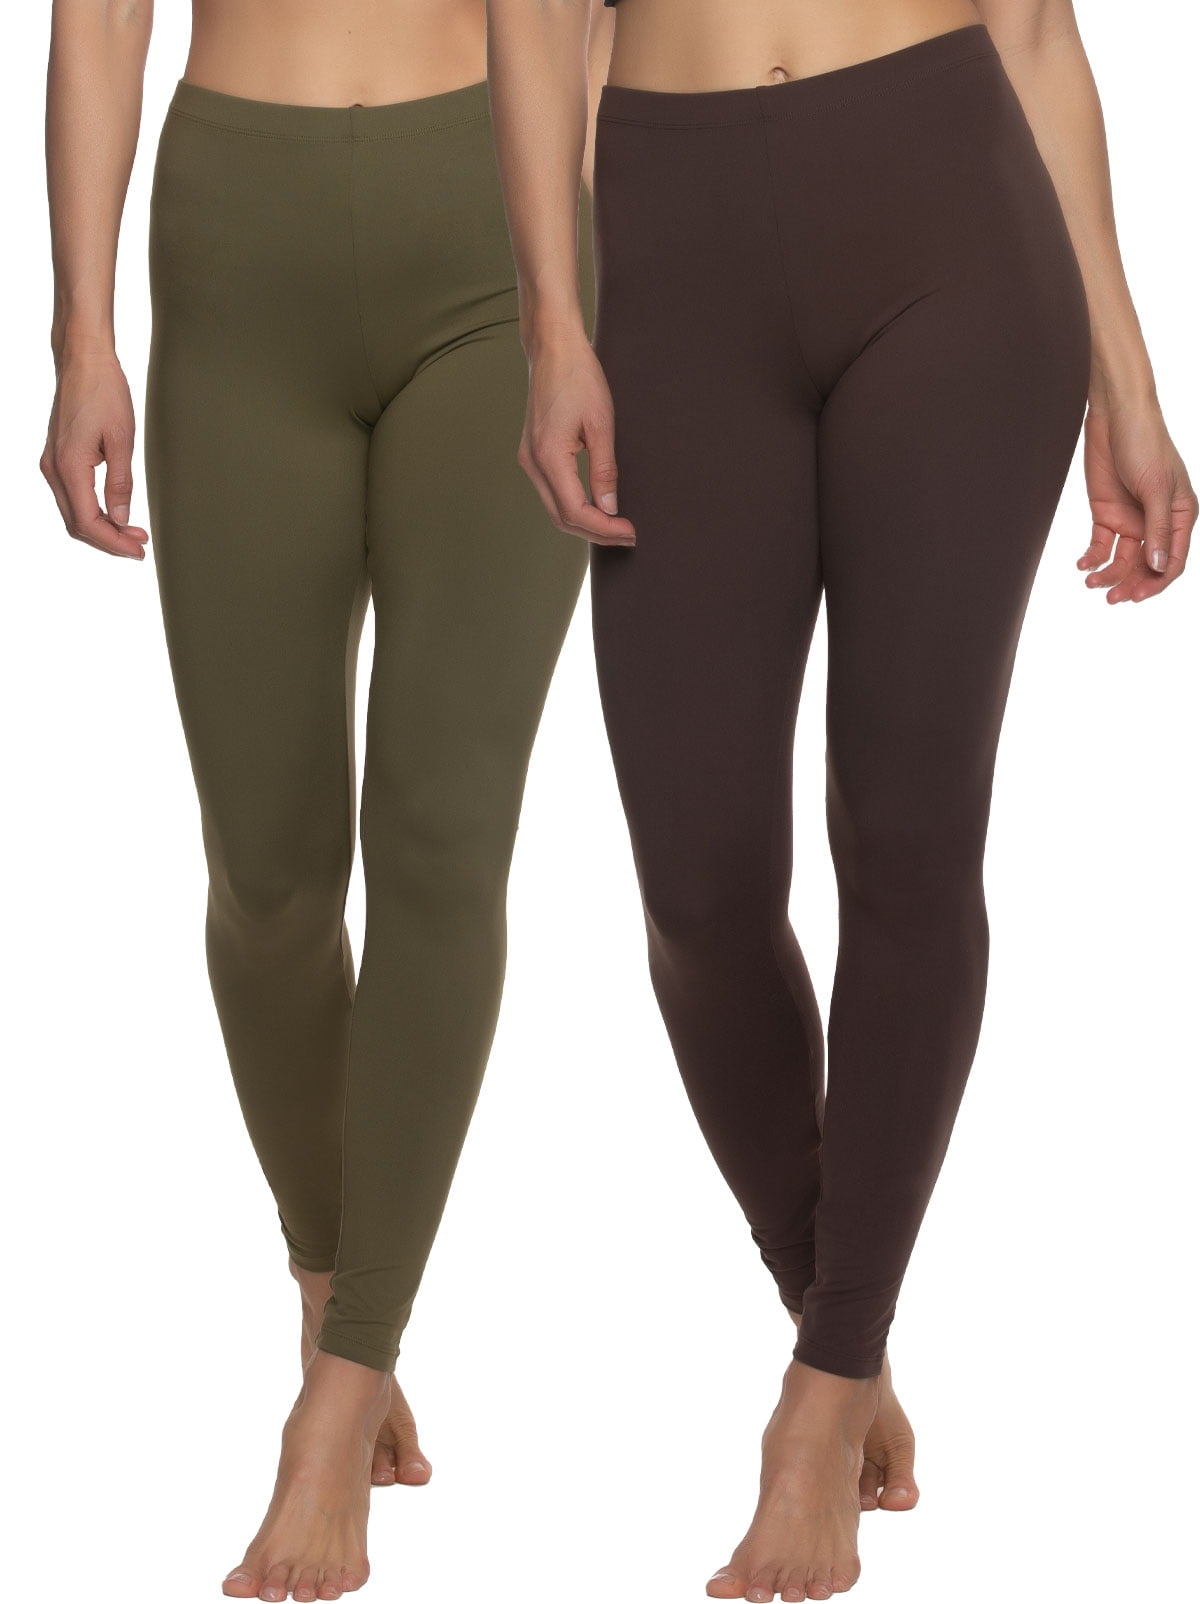 Felina Velvety Super Soft Lightweight Leggings 2-Pack - For Women - Yoga  Pants, Workout Clothes (Warm Desert, Large)